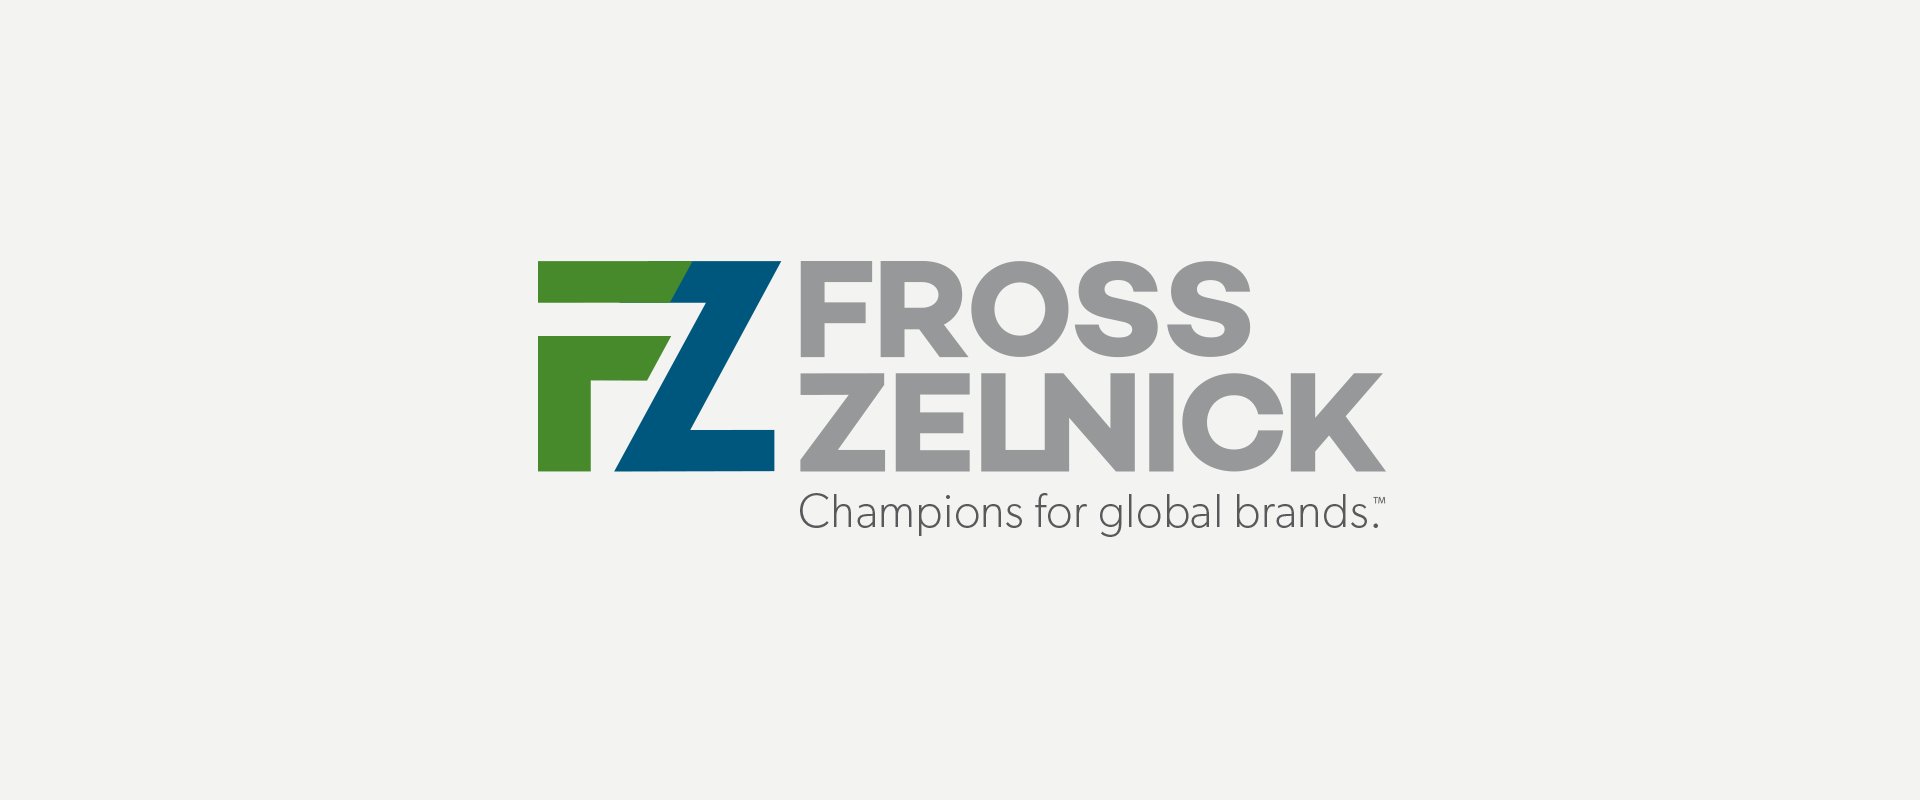 Fross Zelnick Logo and Tagline